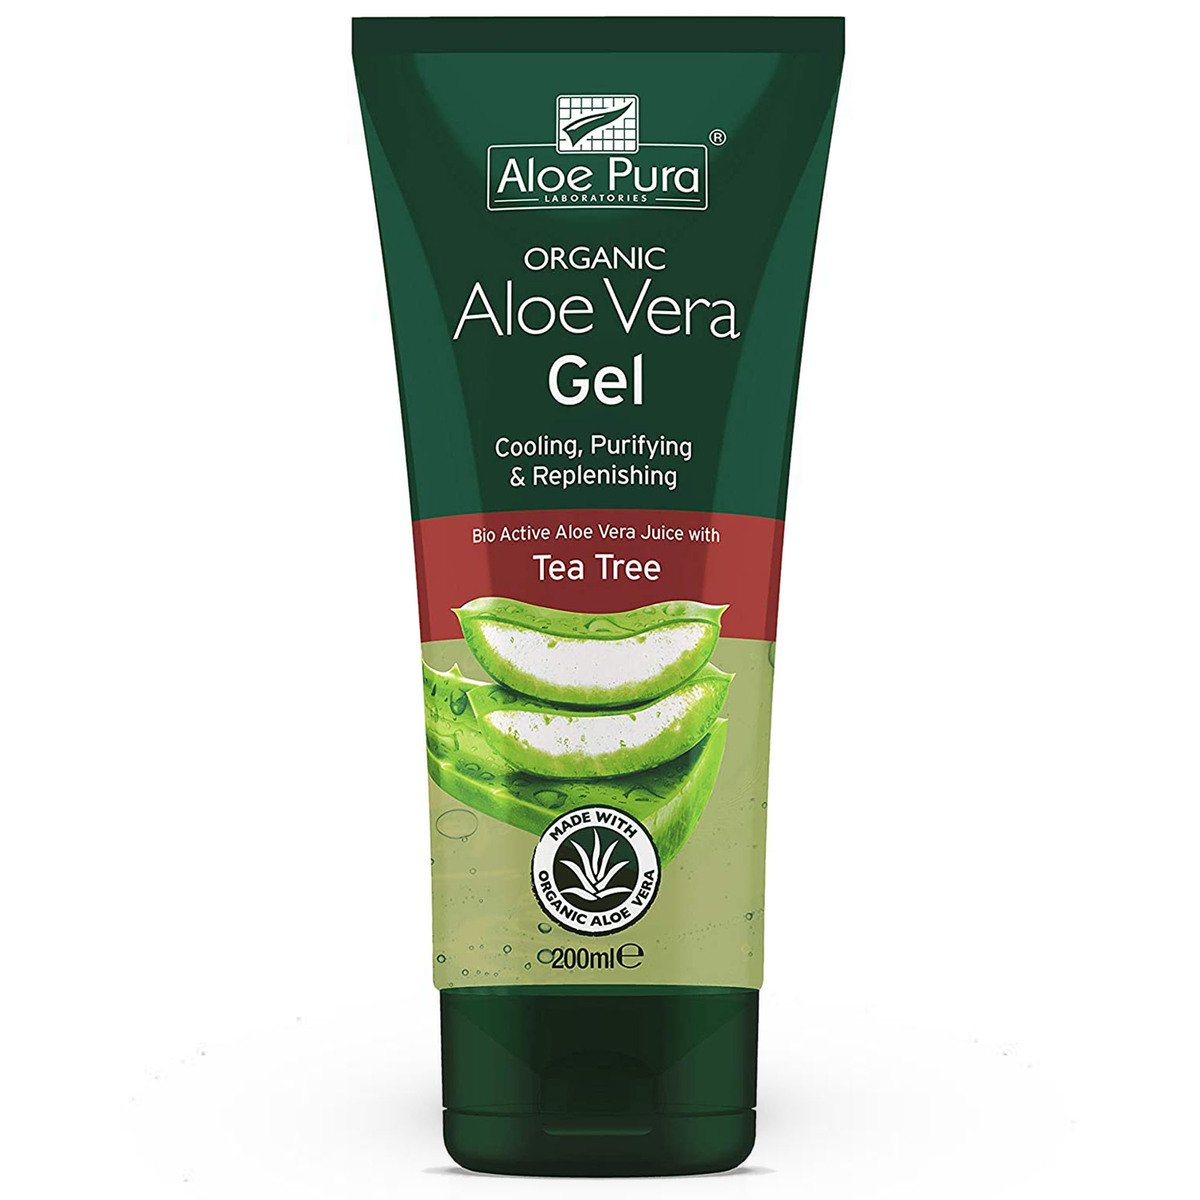 Aloe Pura Organic Aloe Vera Gel + Tea Tree 200ml